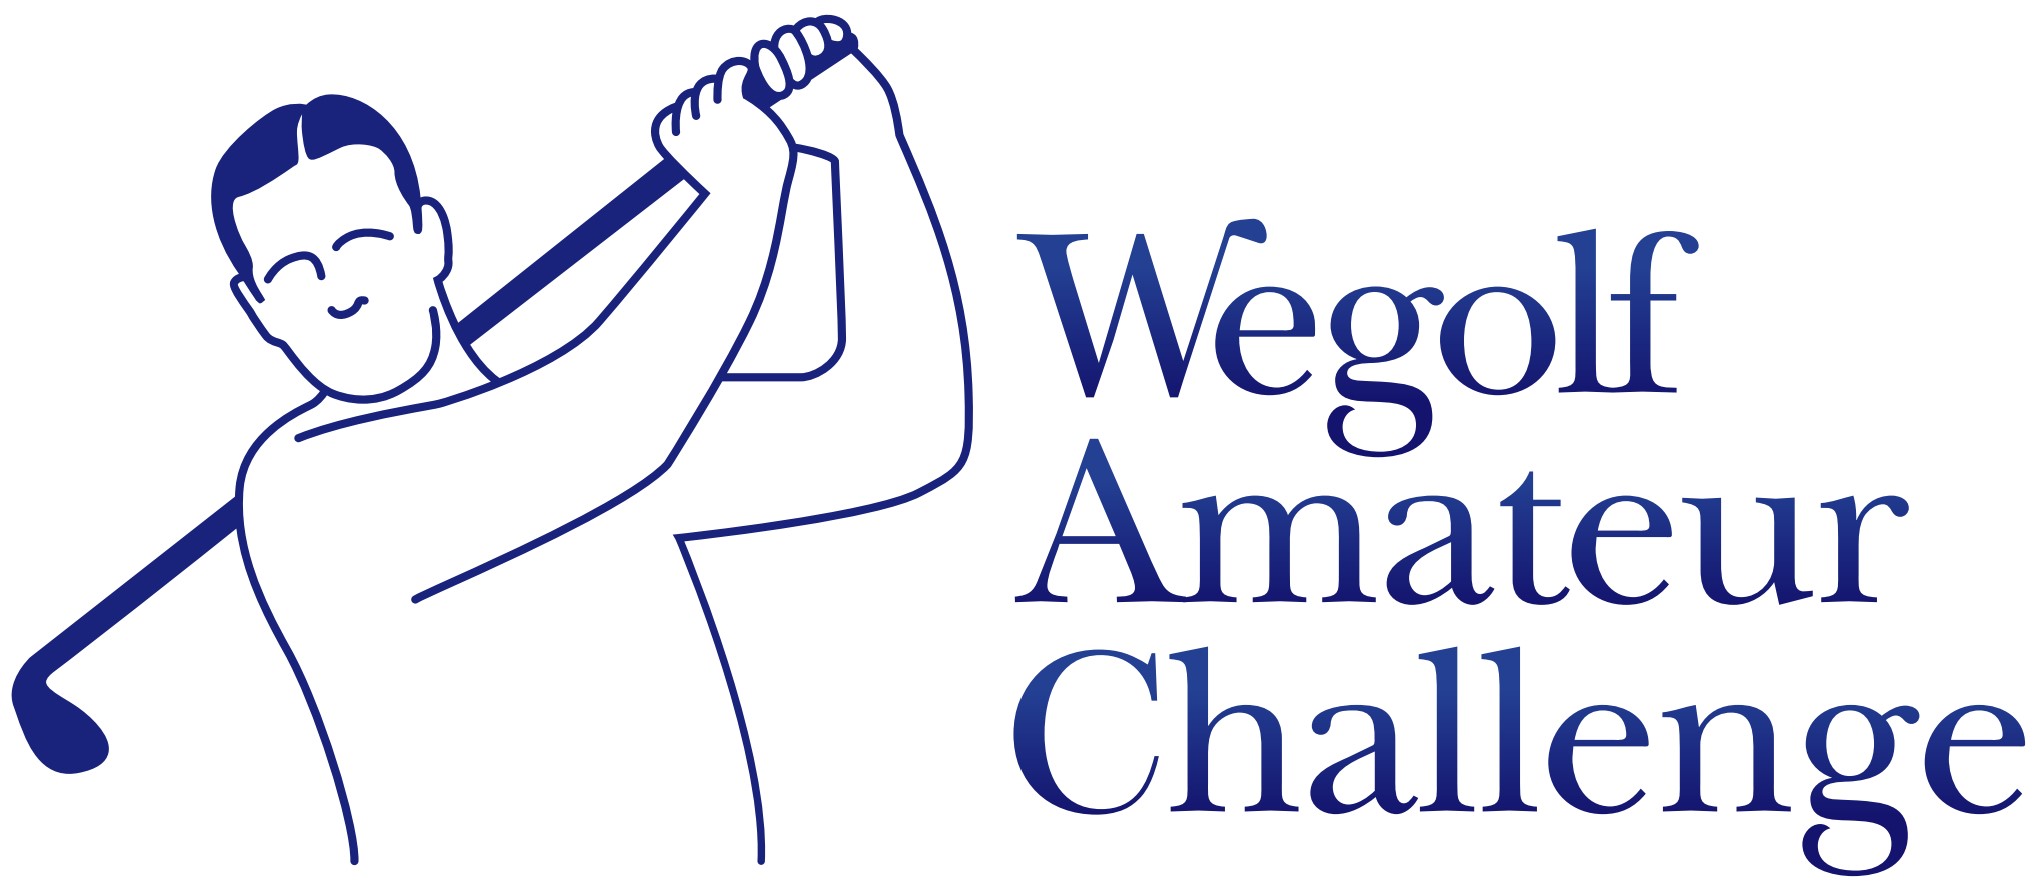 Wegolf Amateur Challenge